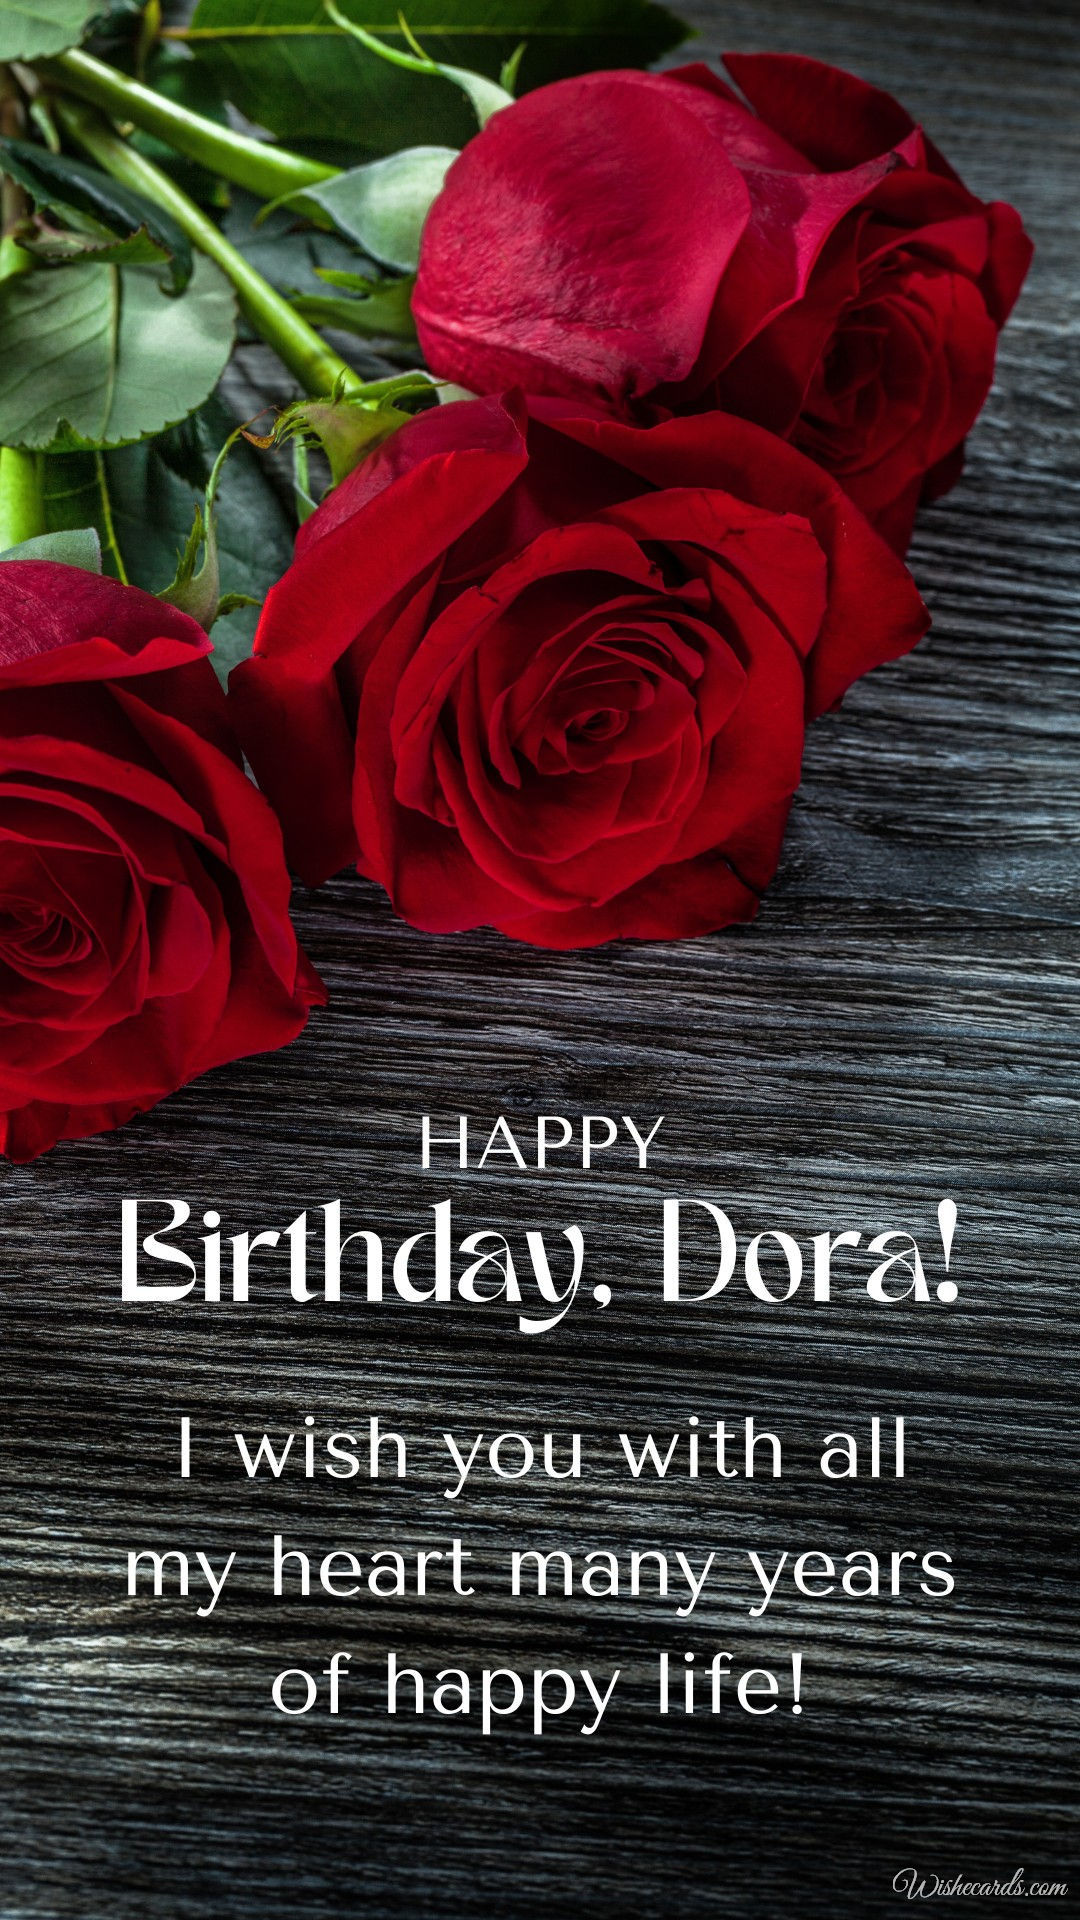 Happy Birthday Card for Dora